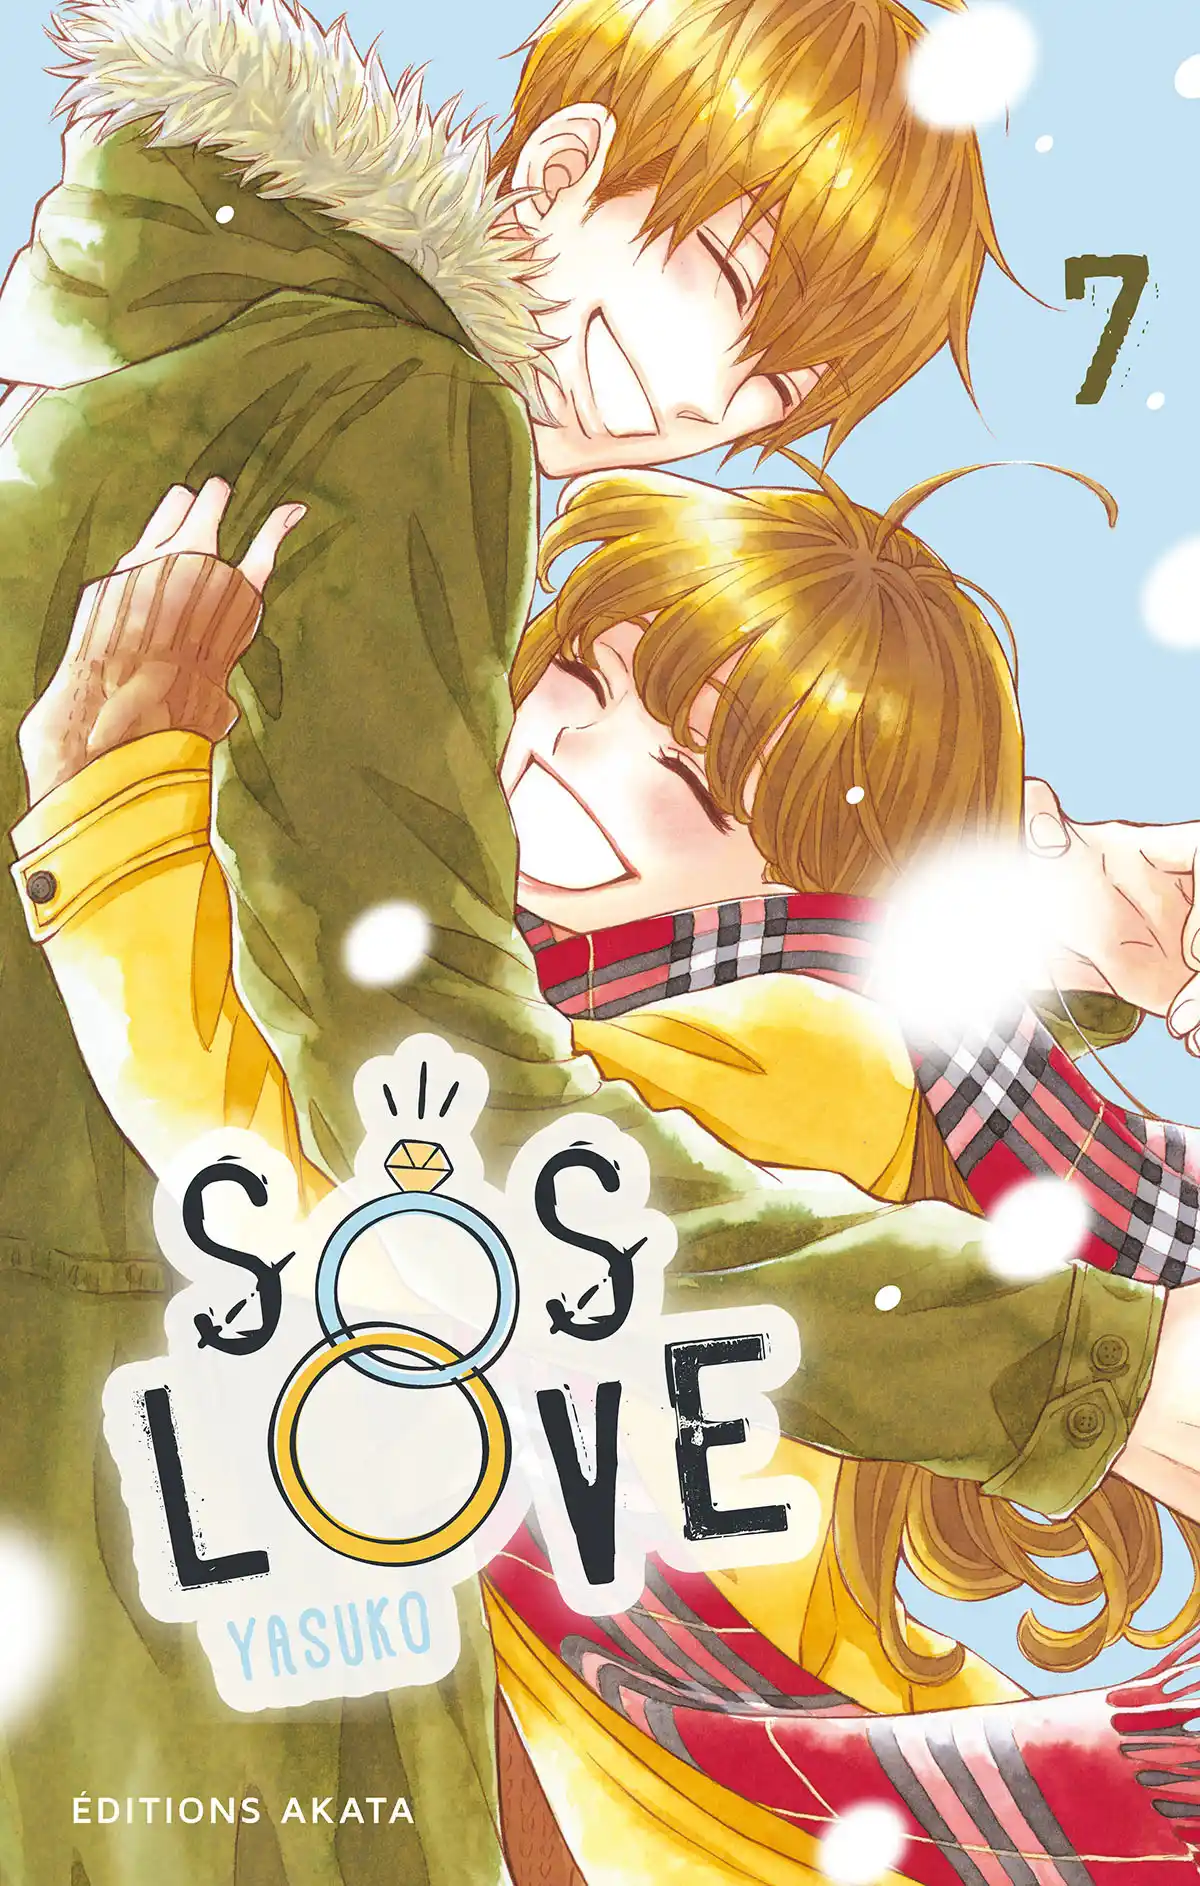 SOS Love Volume 7 page 1